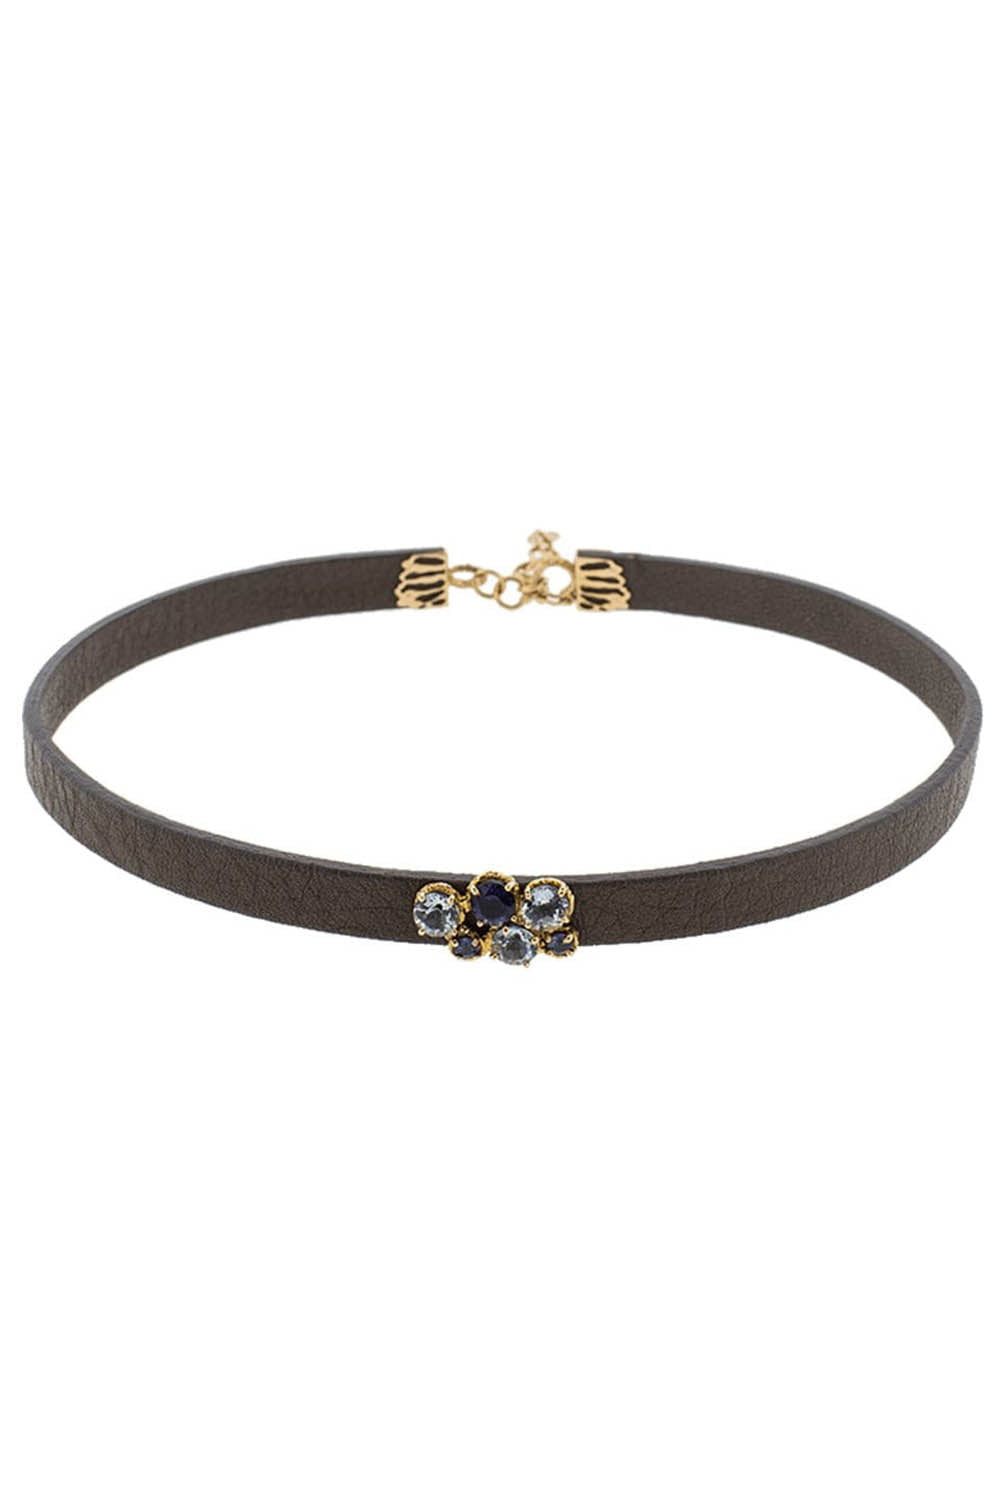 FEDERICA RETTORE-Brilliant Cut Sapphire Leather Wrap Bracelet-ROSE GOLD